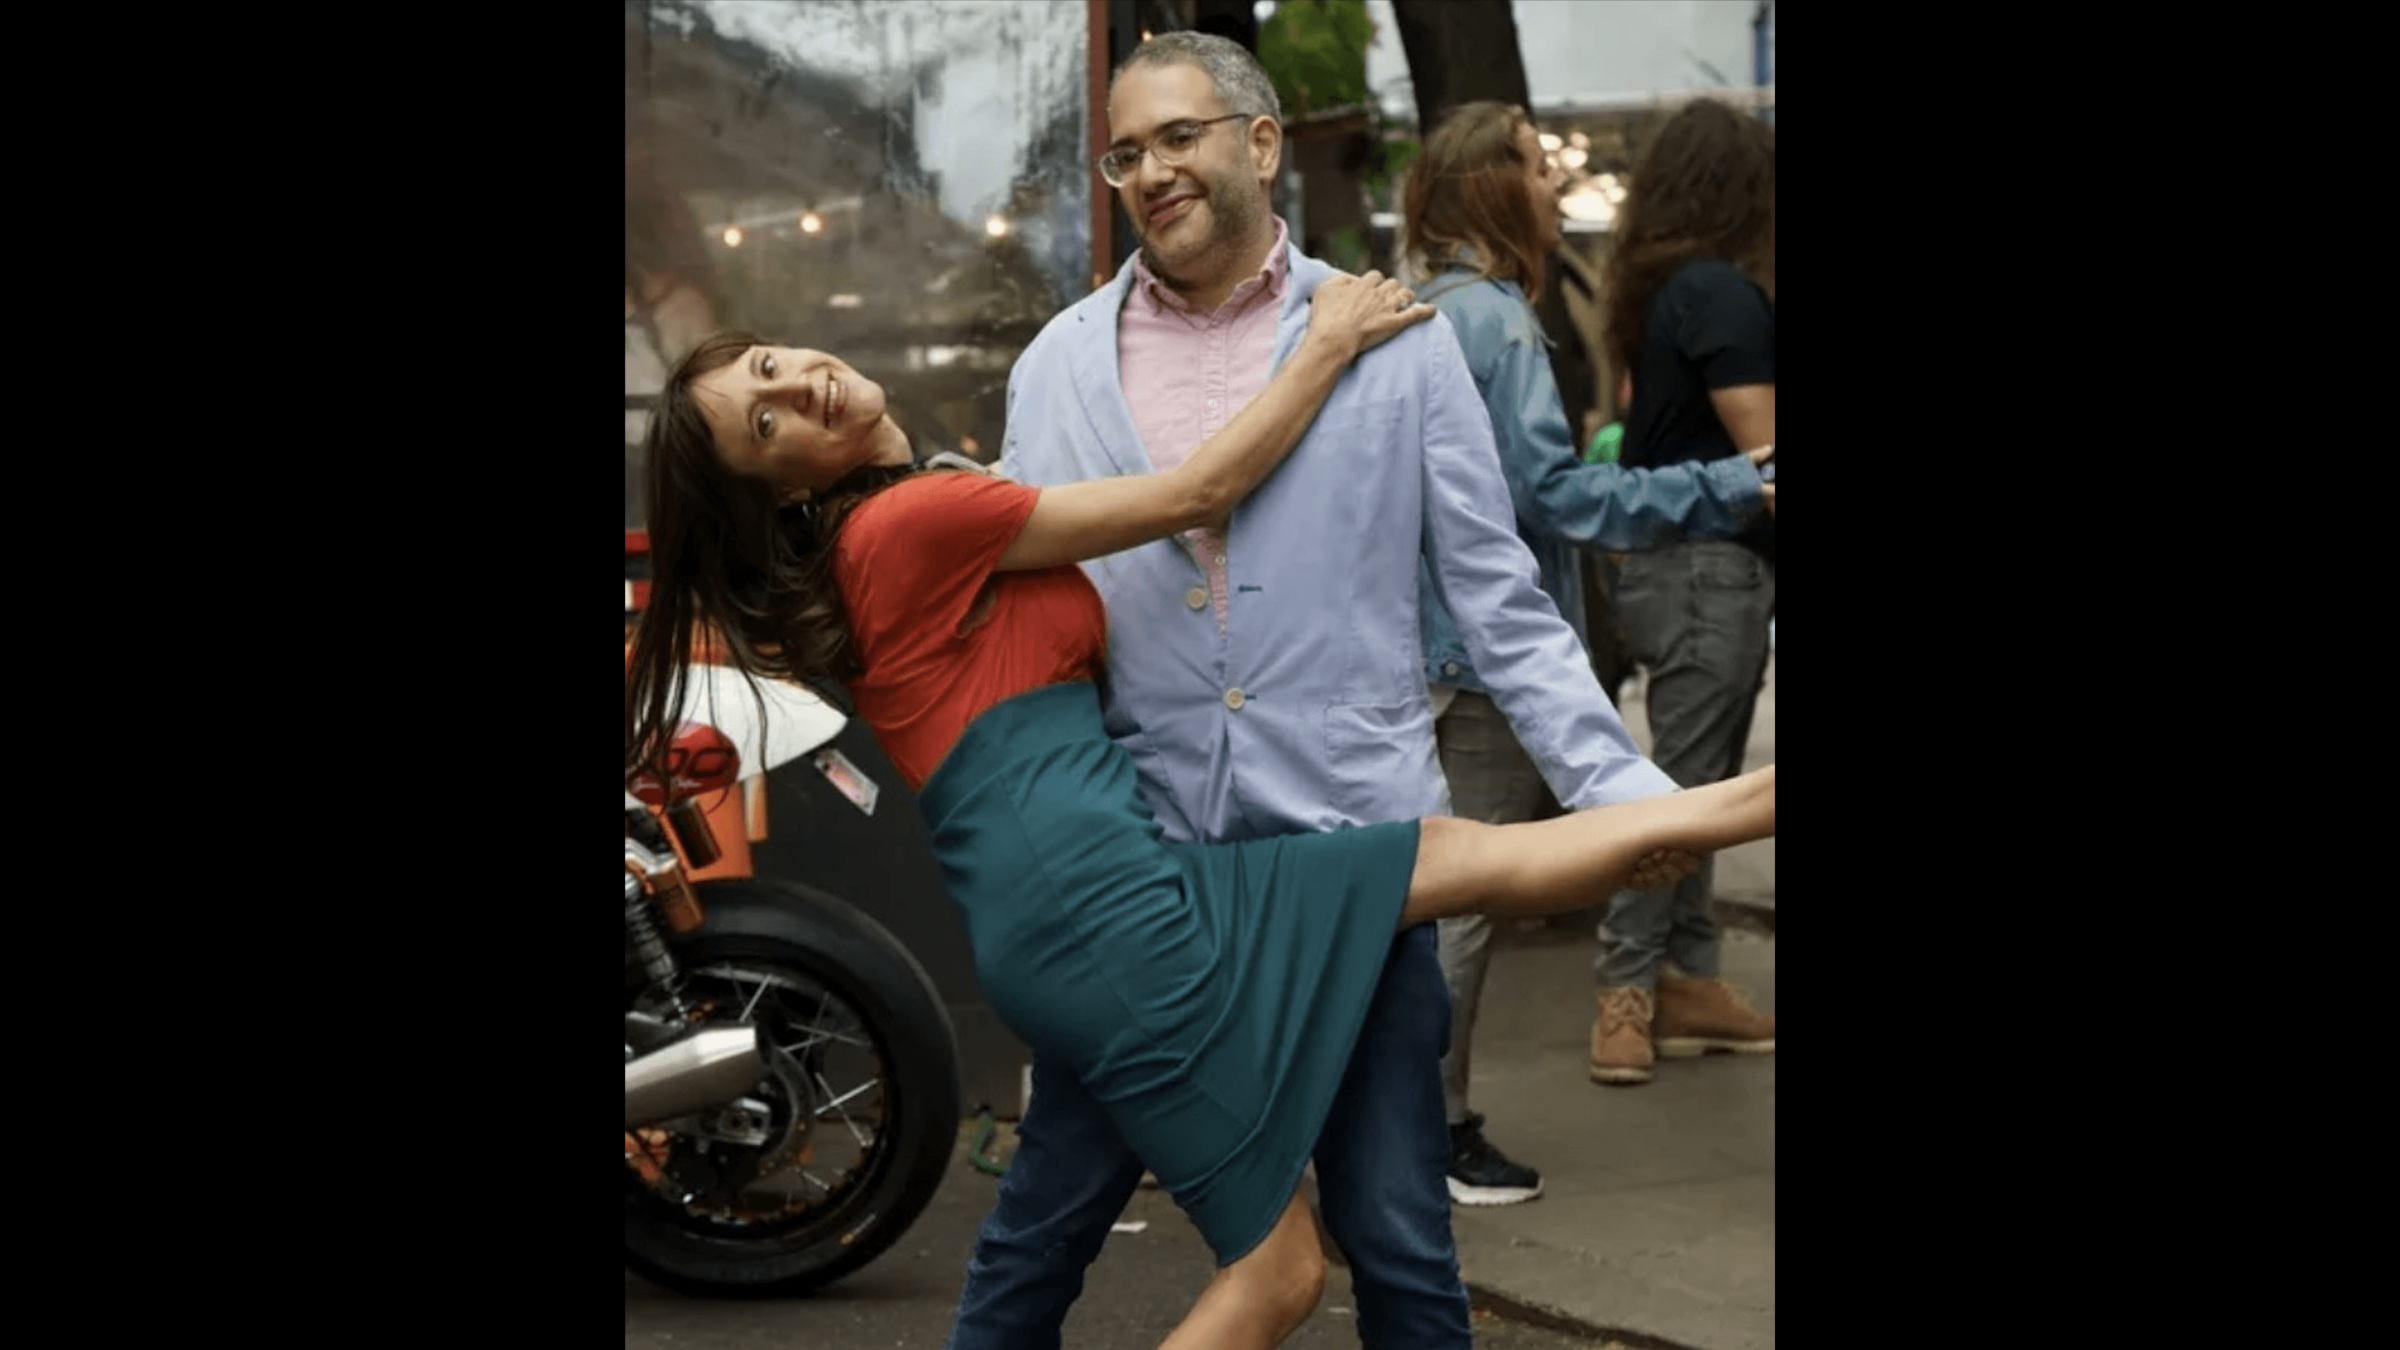 Woman and man embrace in joyful, playful pose